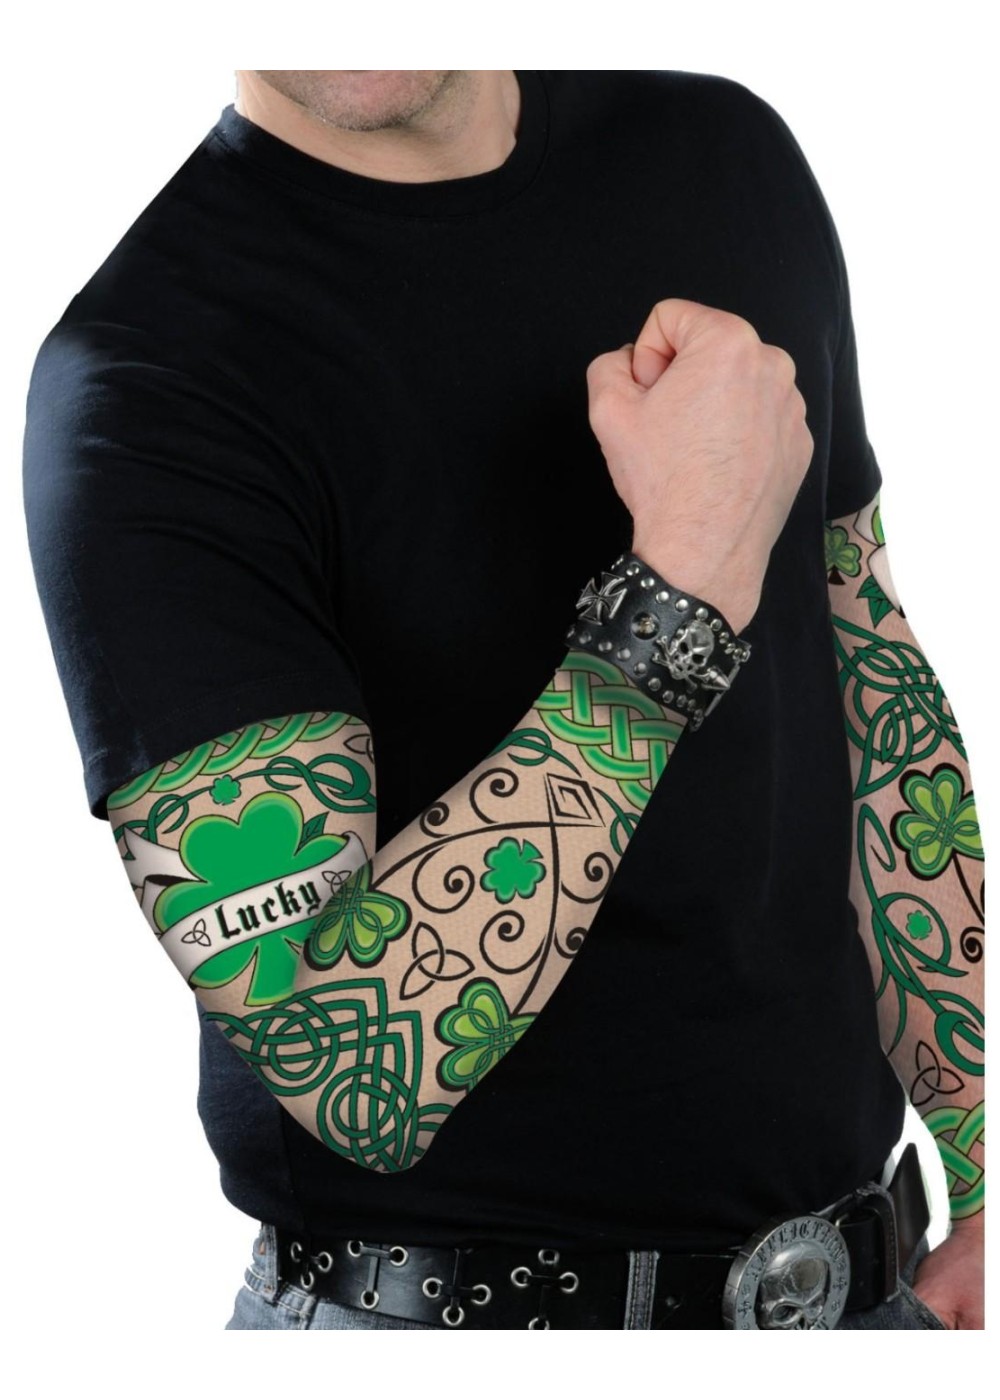  Saint Patrick's Day Arm Tattoo Sleeves